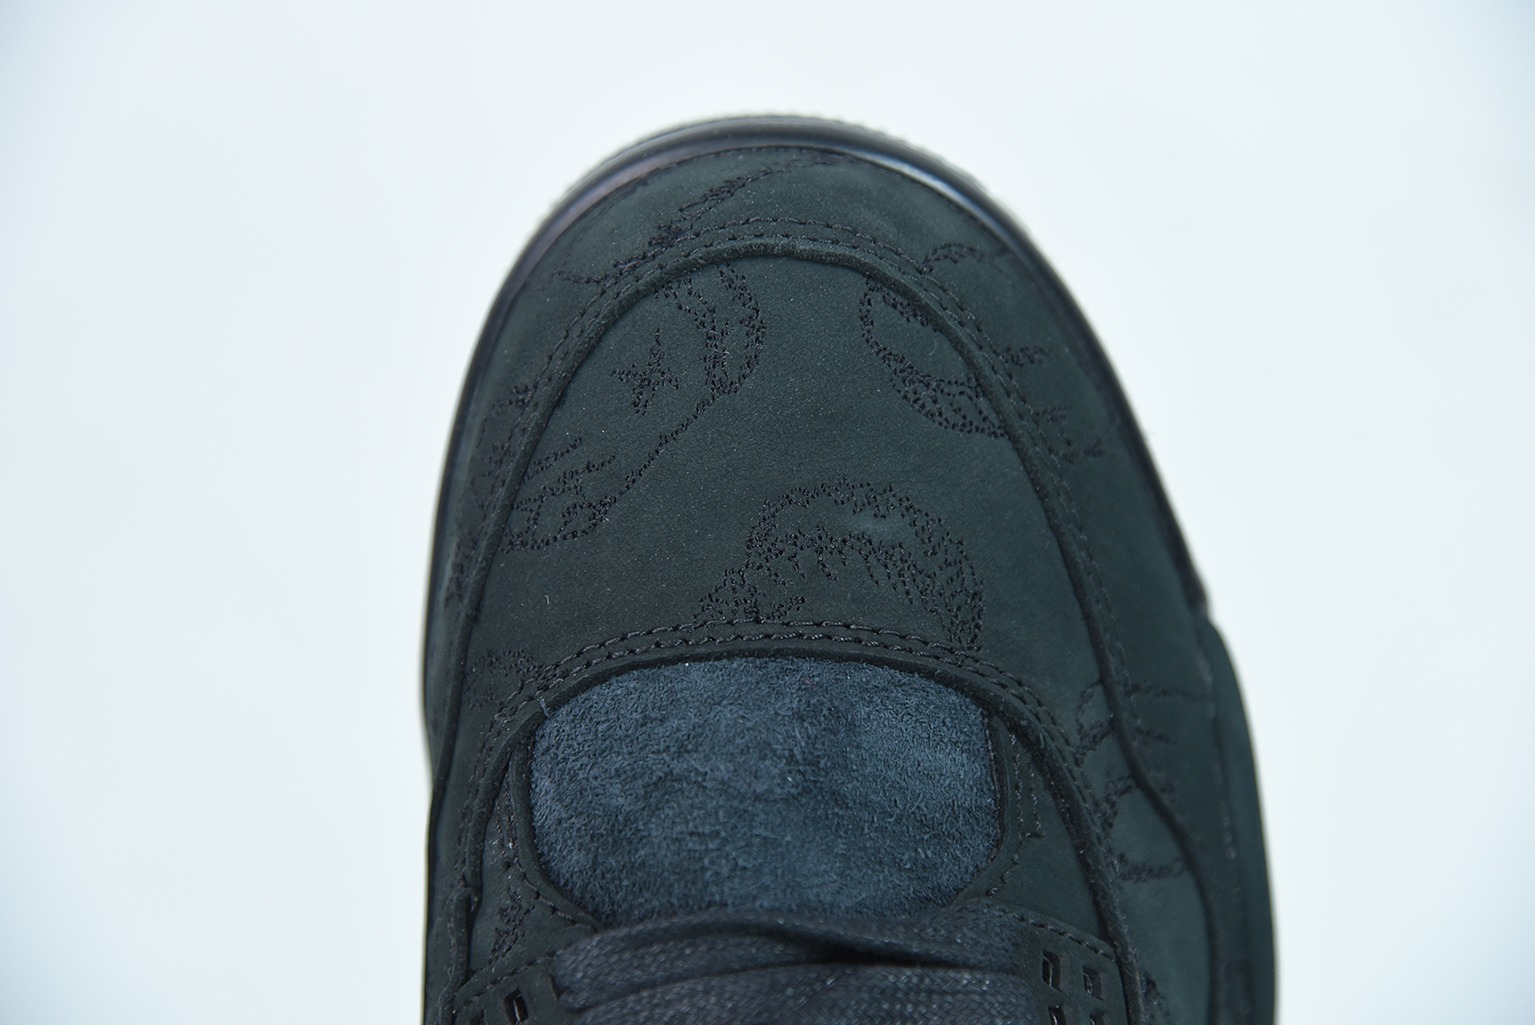 KAWS x Air Jordan 4 Black AJ4 黑麂皮限量联名 夜光水晶中帮男士运动鞋930155-001